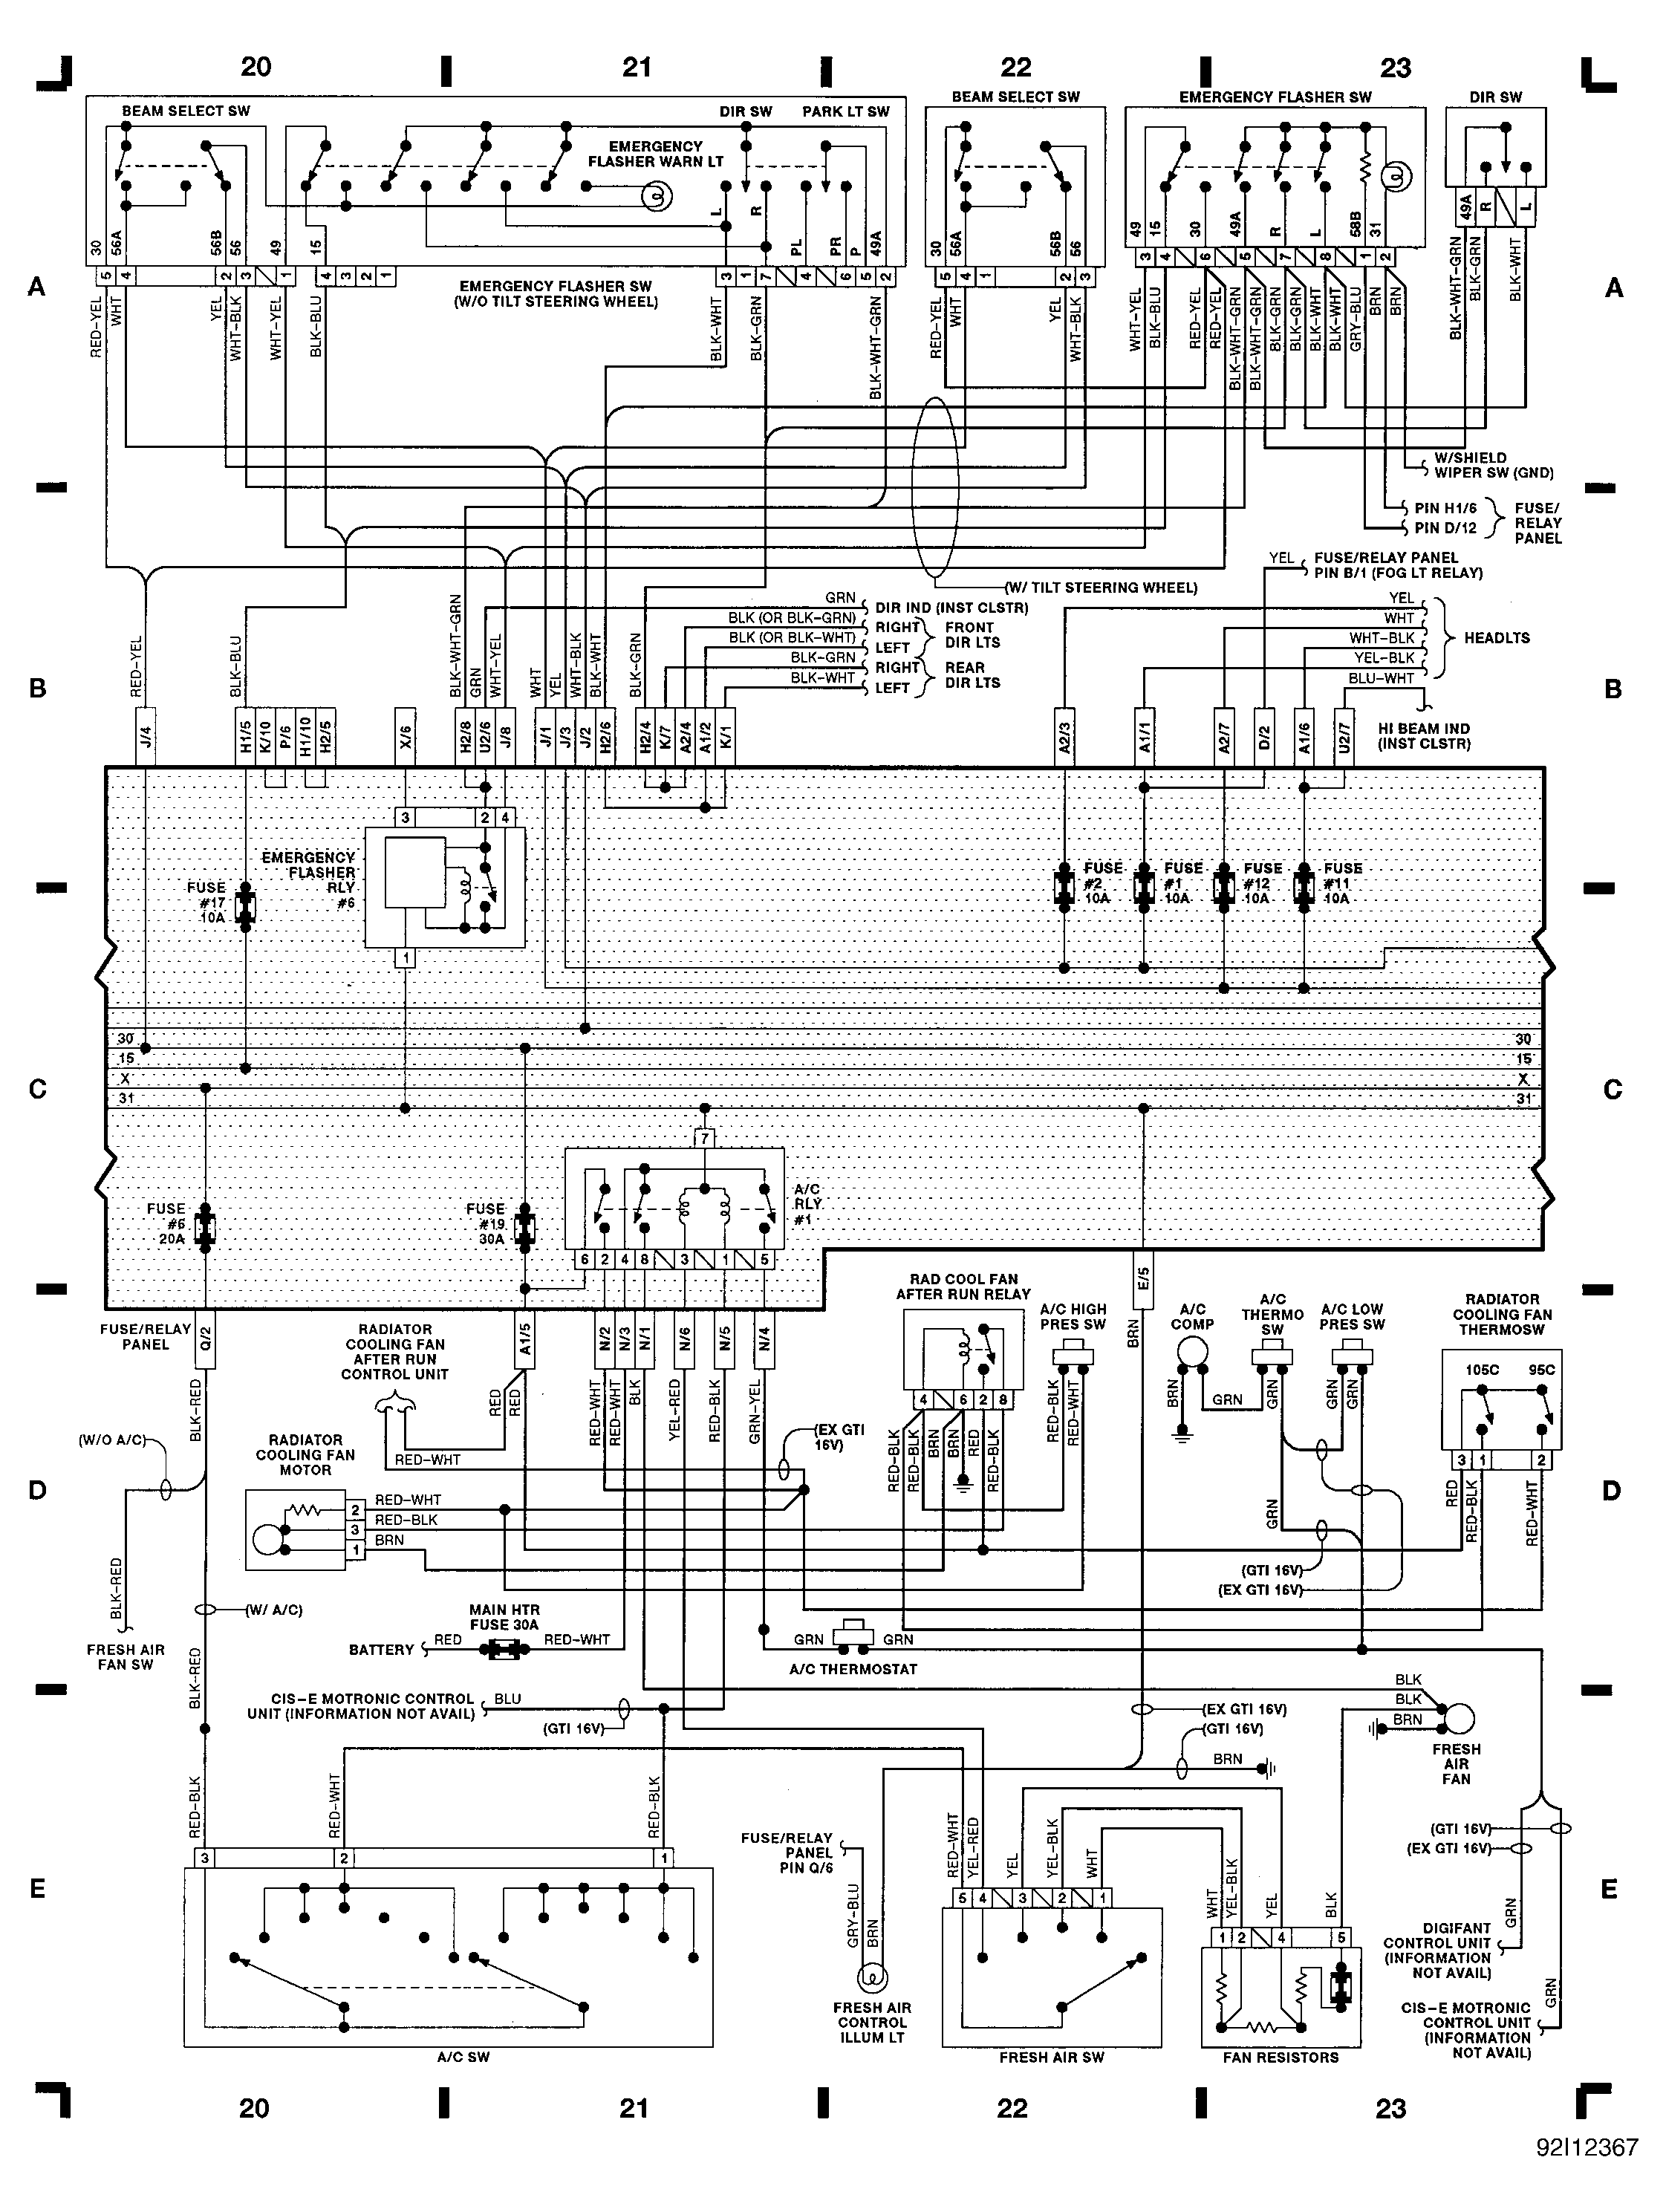 mk4 golf gti wiring diagram - Wiring Diagram